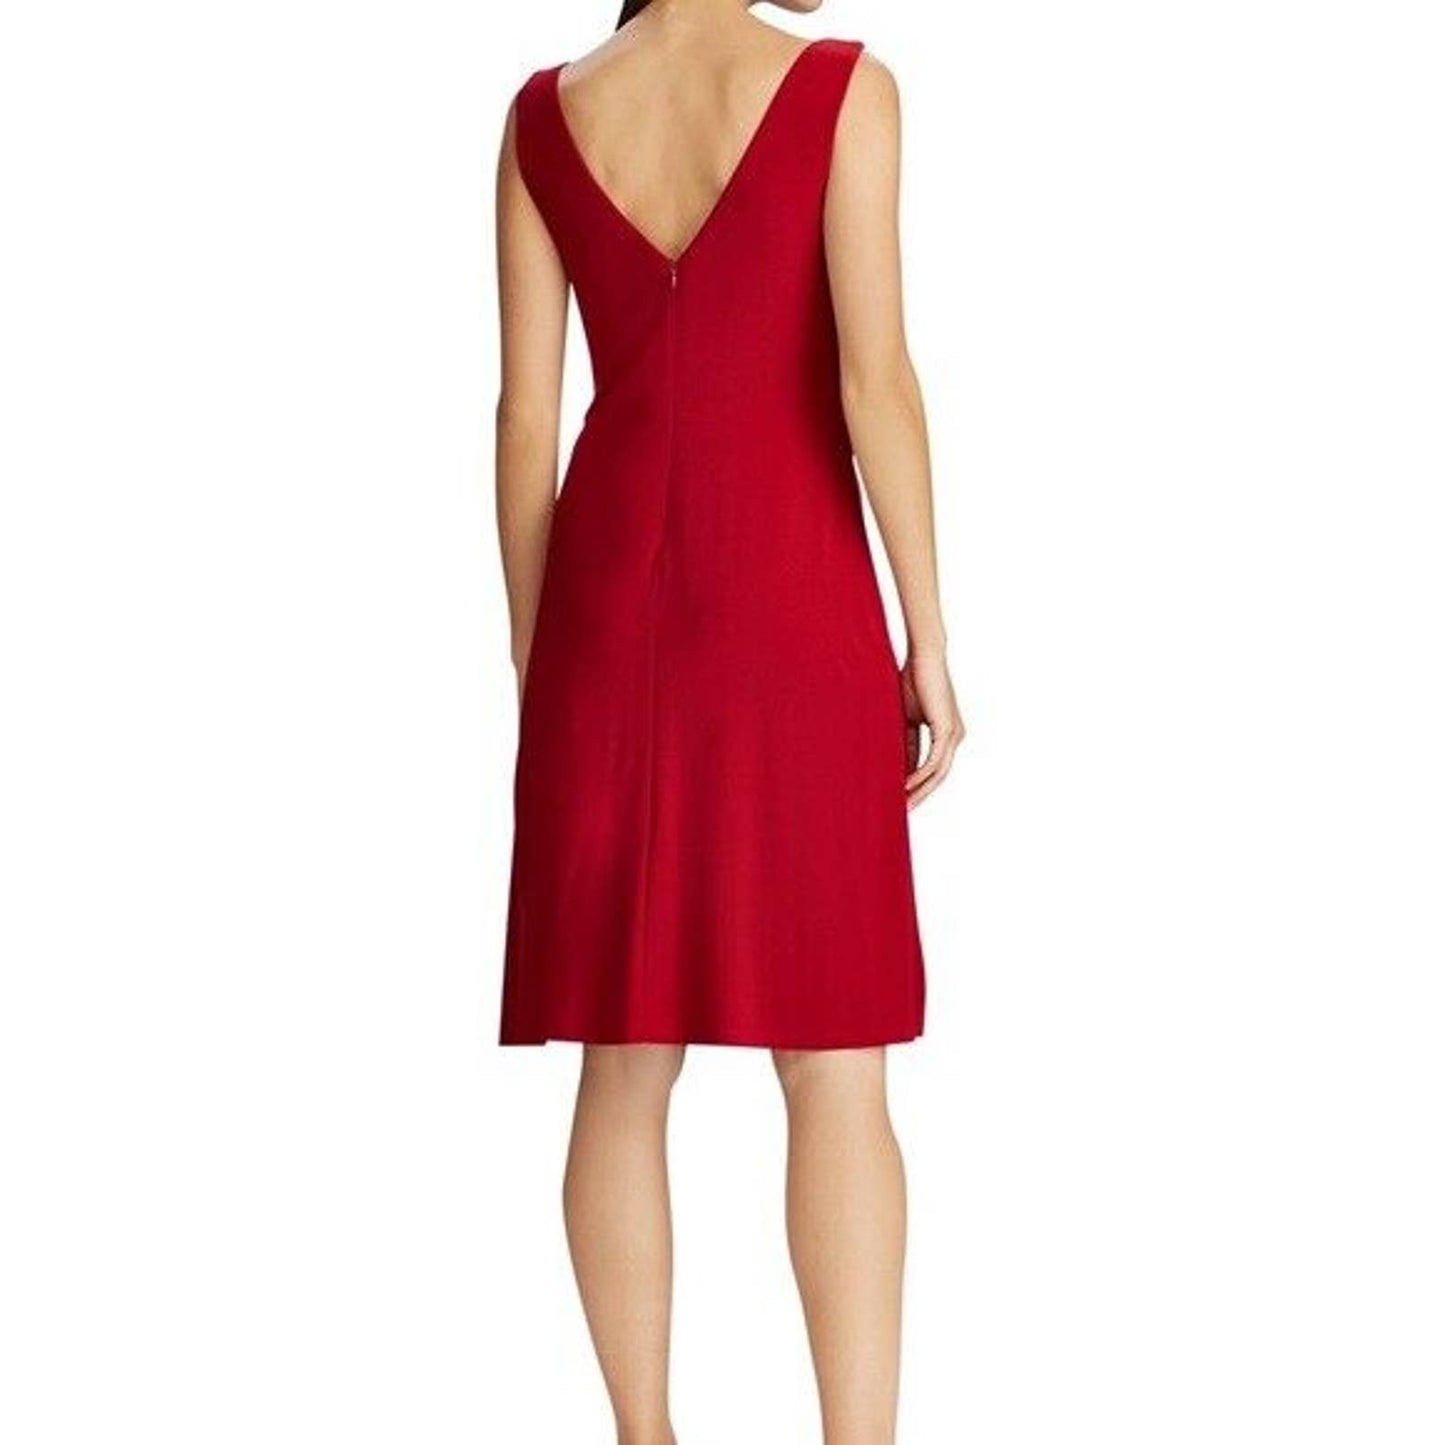 LAUREN RALPH LAUREN LADIES VAWLISA SLEEVELESS COCKTAIL DRESS, RED 0P NWT $155